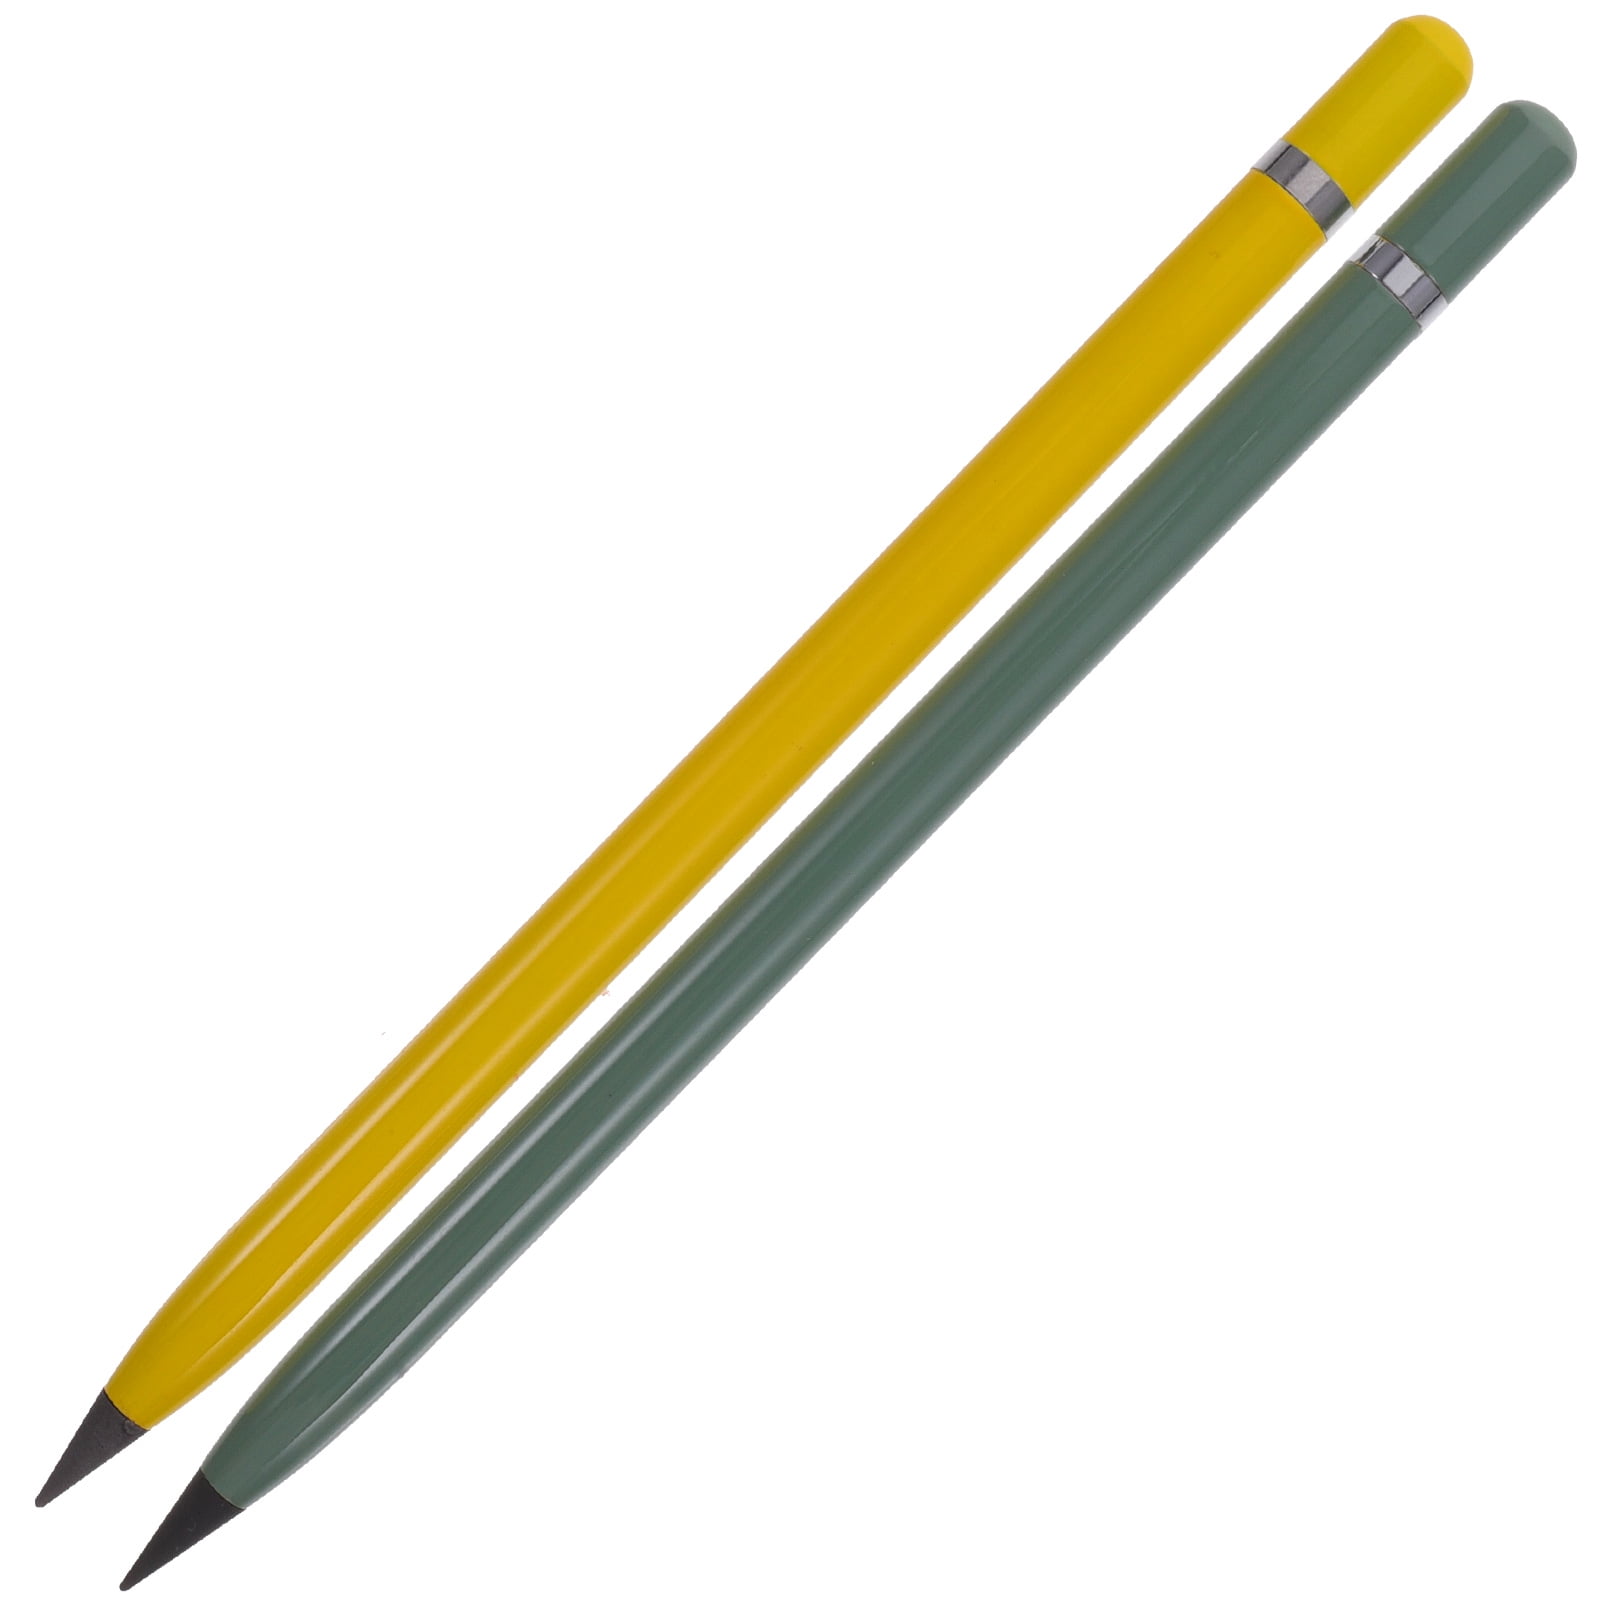 2pcs Metal Inkless Pen Metallic Pencil Forever Pencil Inkless Erasable Pencil for Writing Drawing Drafting, Size: 17.2X1X1CM